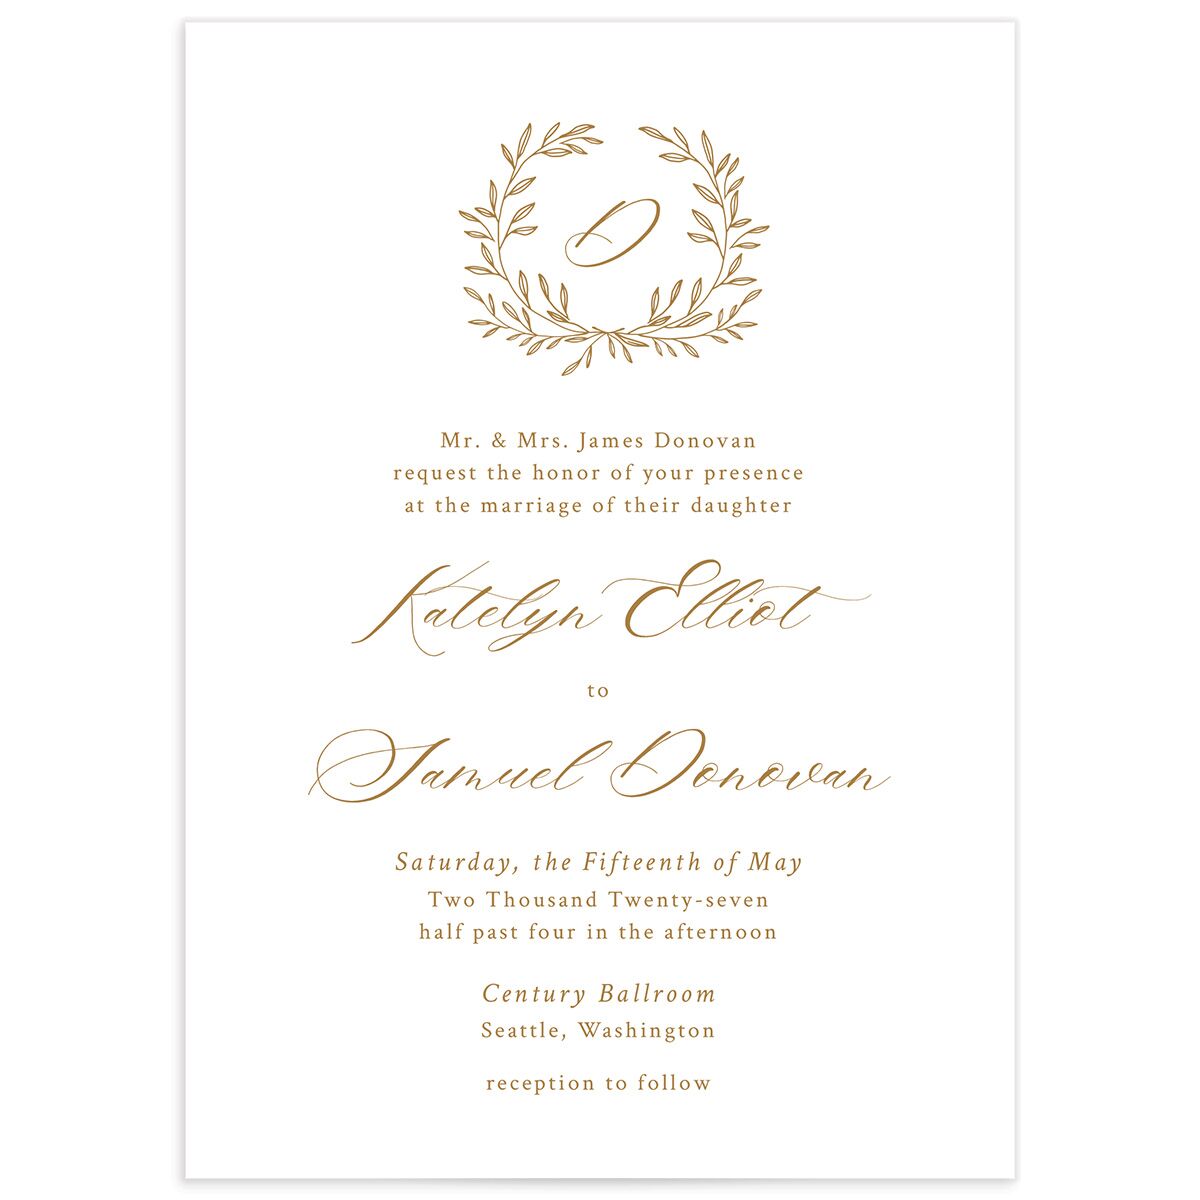 Monogram Wreath Wedding Invitations